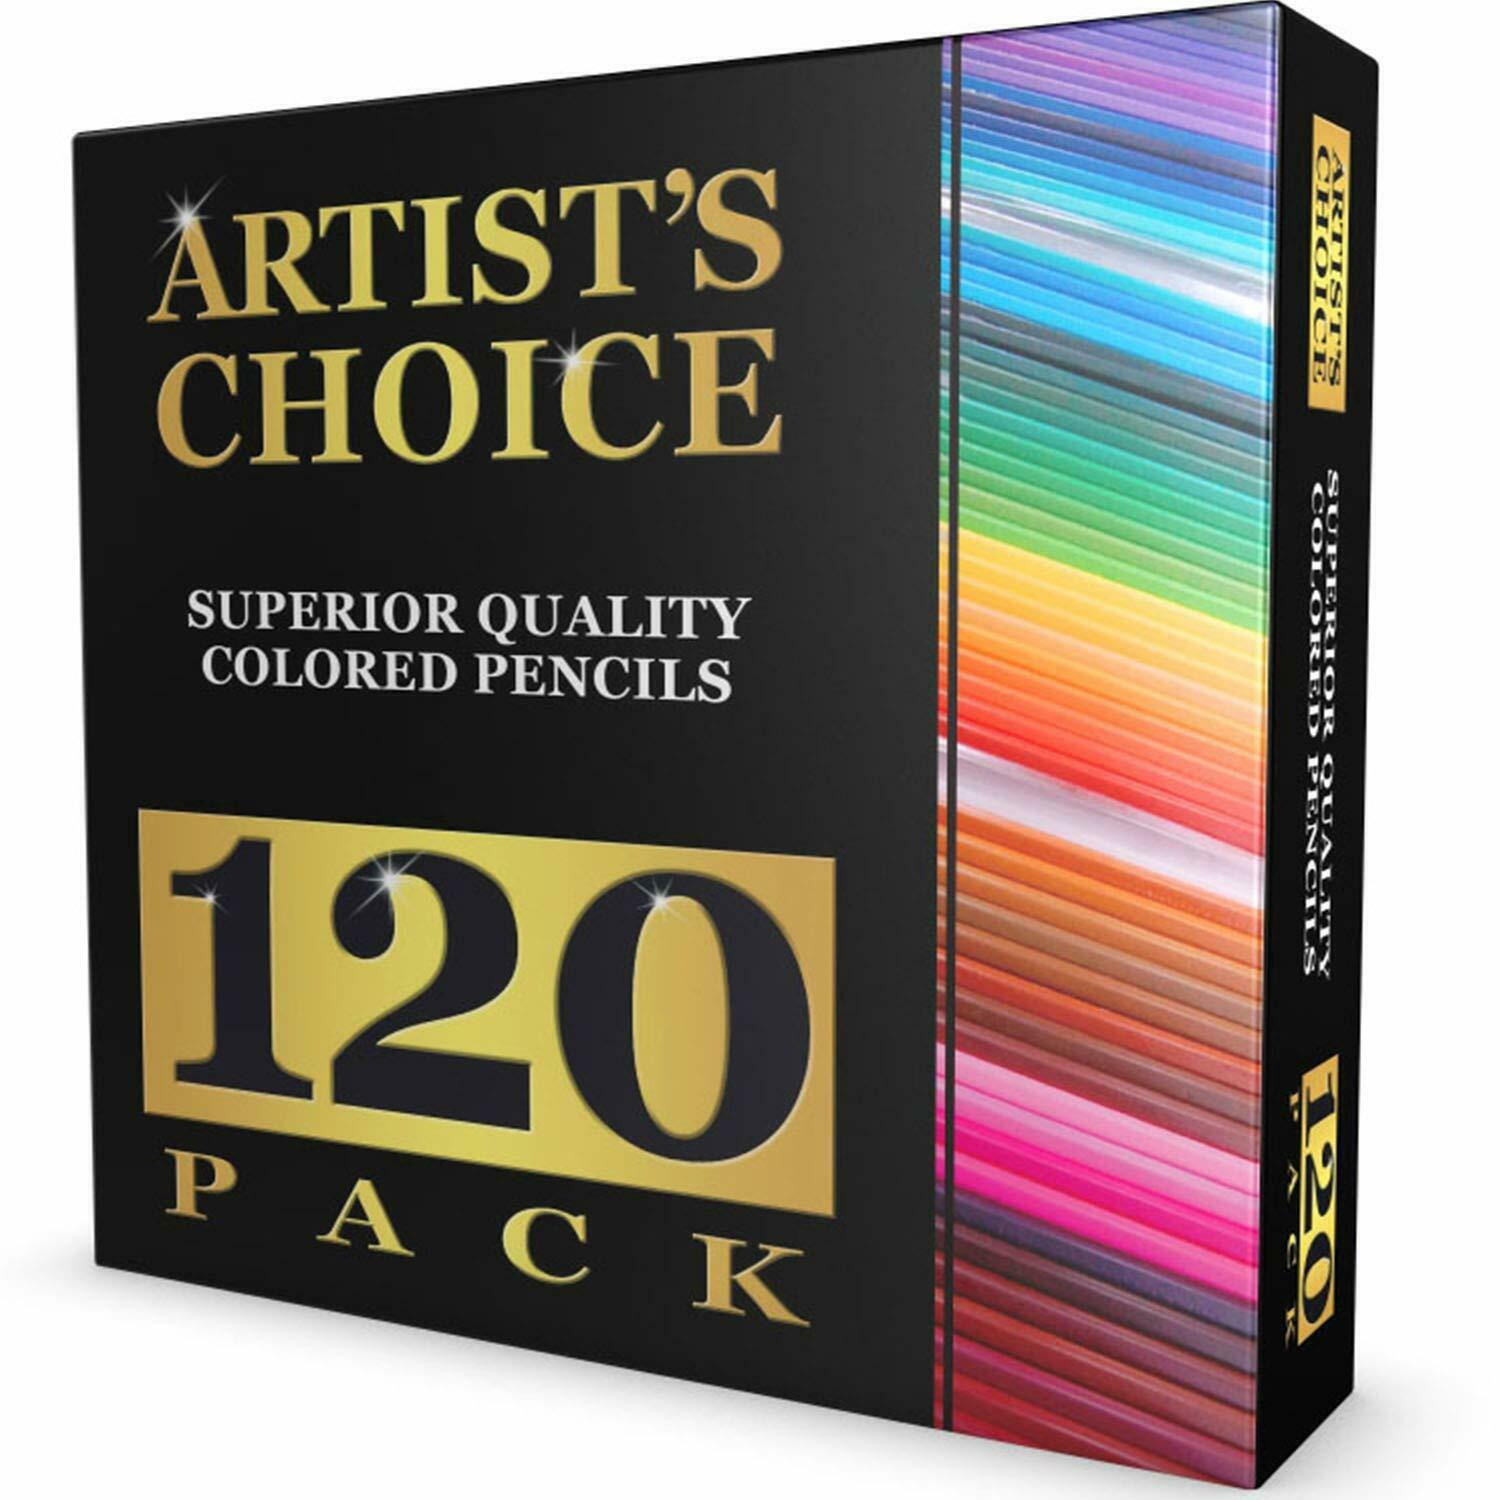 Artist's Choice Premier Colored Pencils - 120 Pack - Premium Quality Best Seller